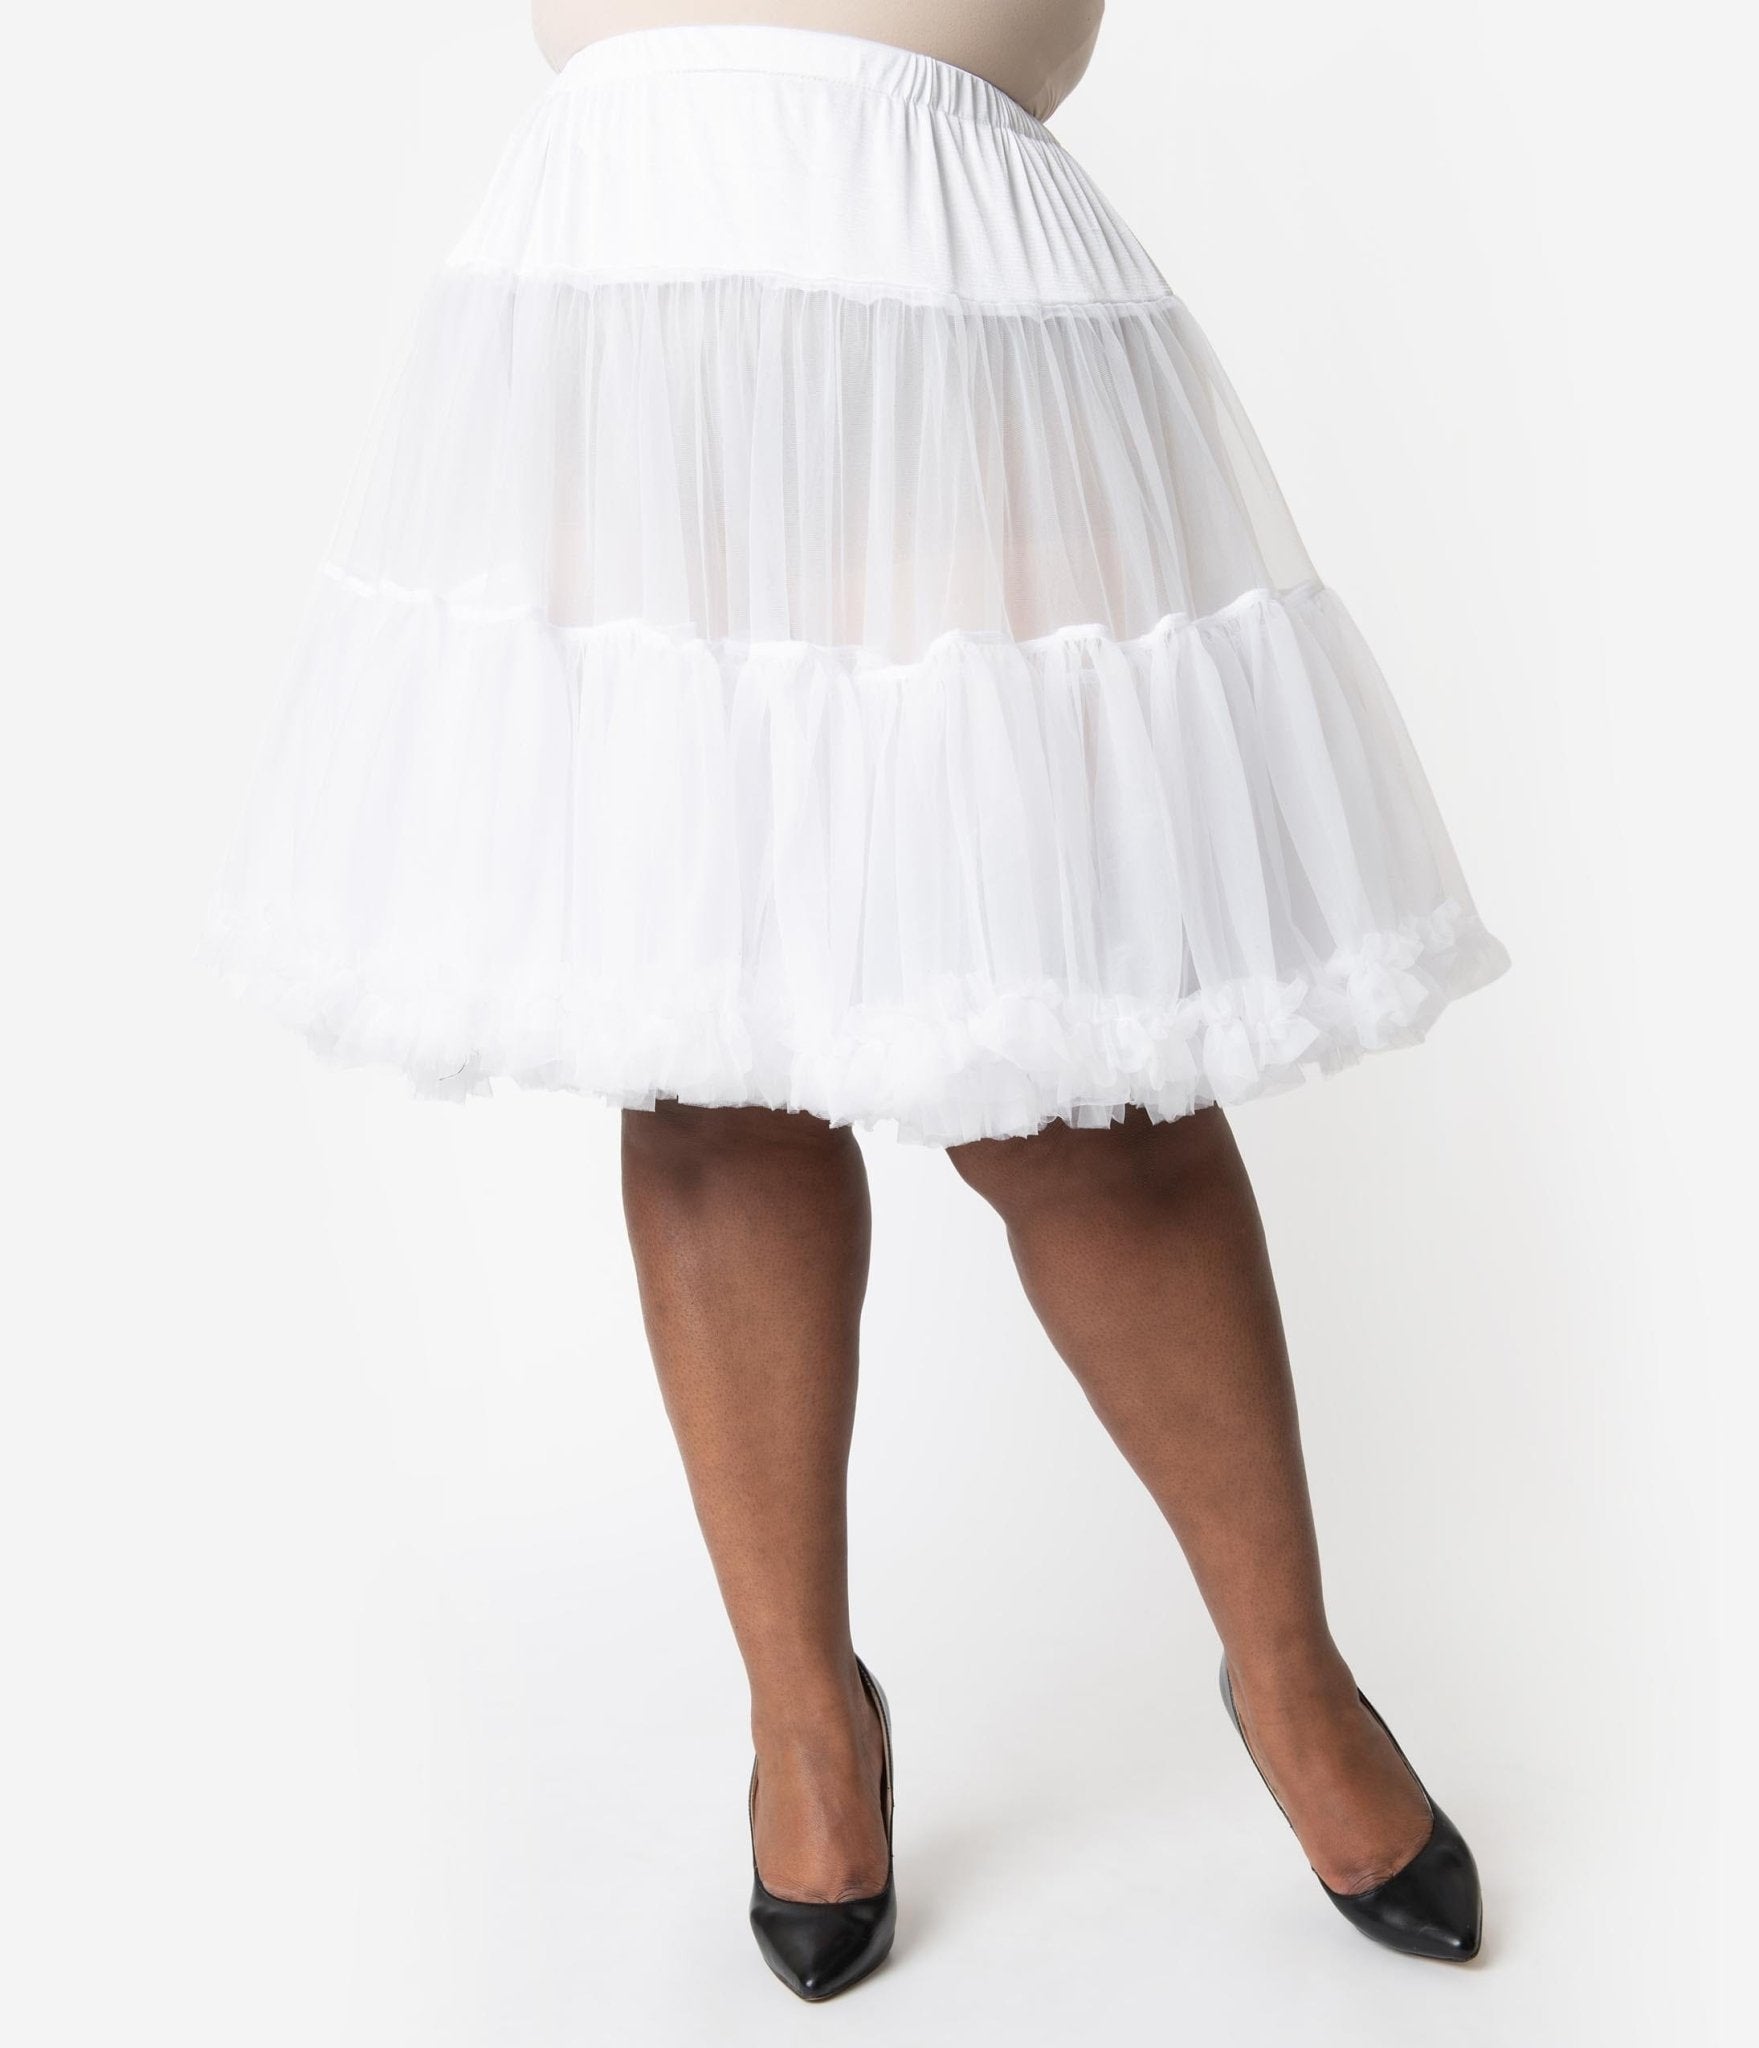 Plus Size Knee Length Petticoat Online